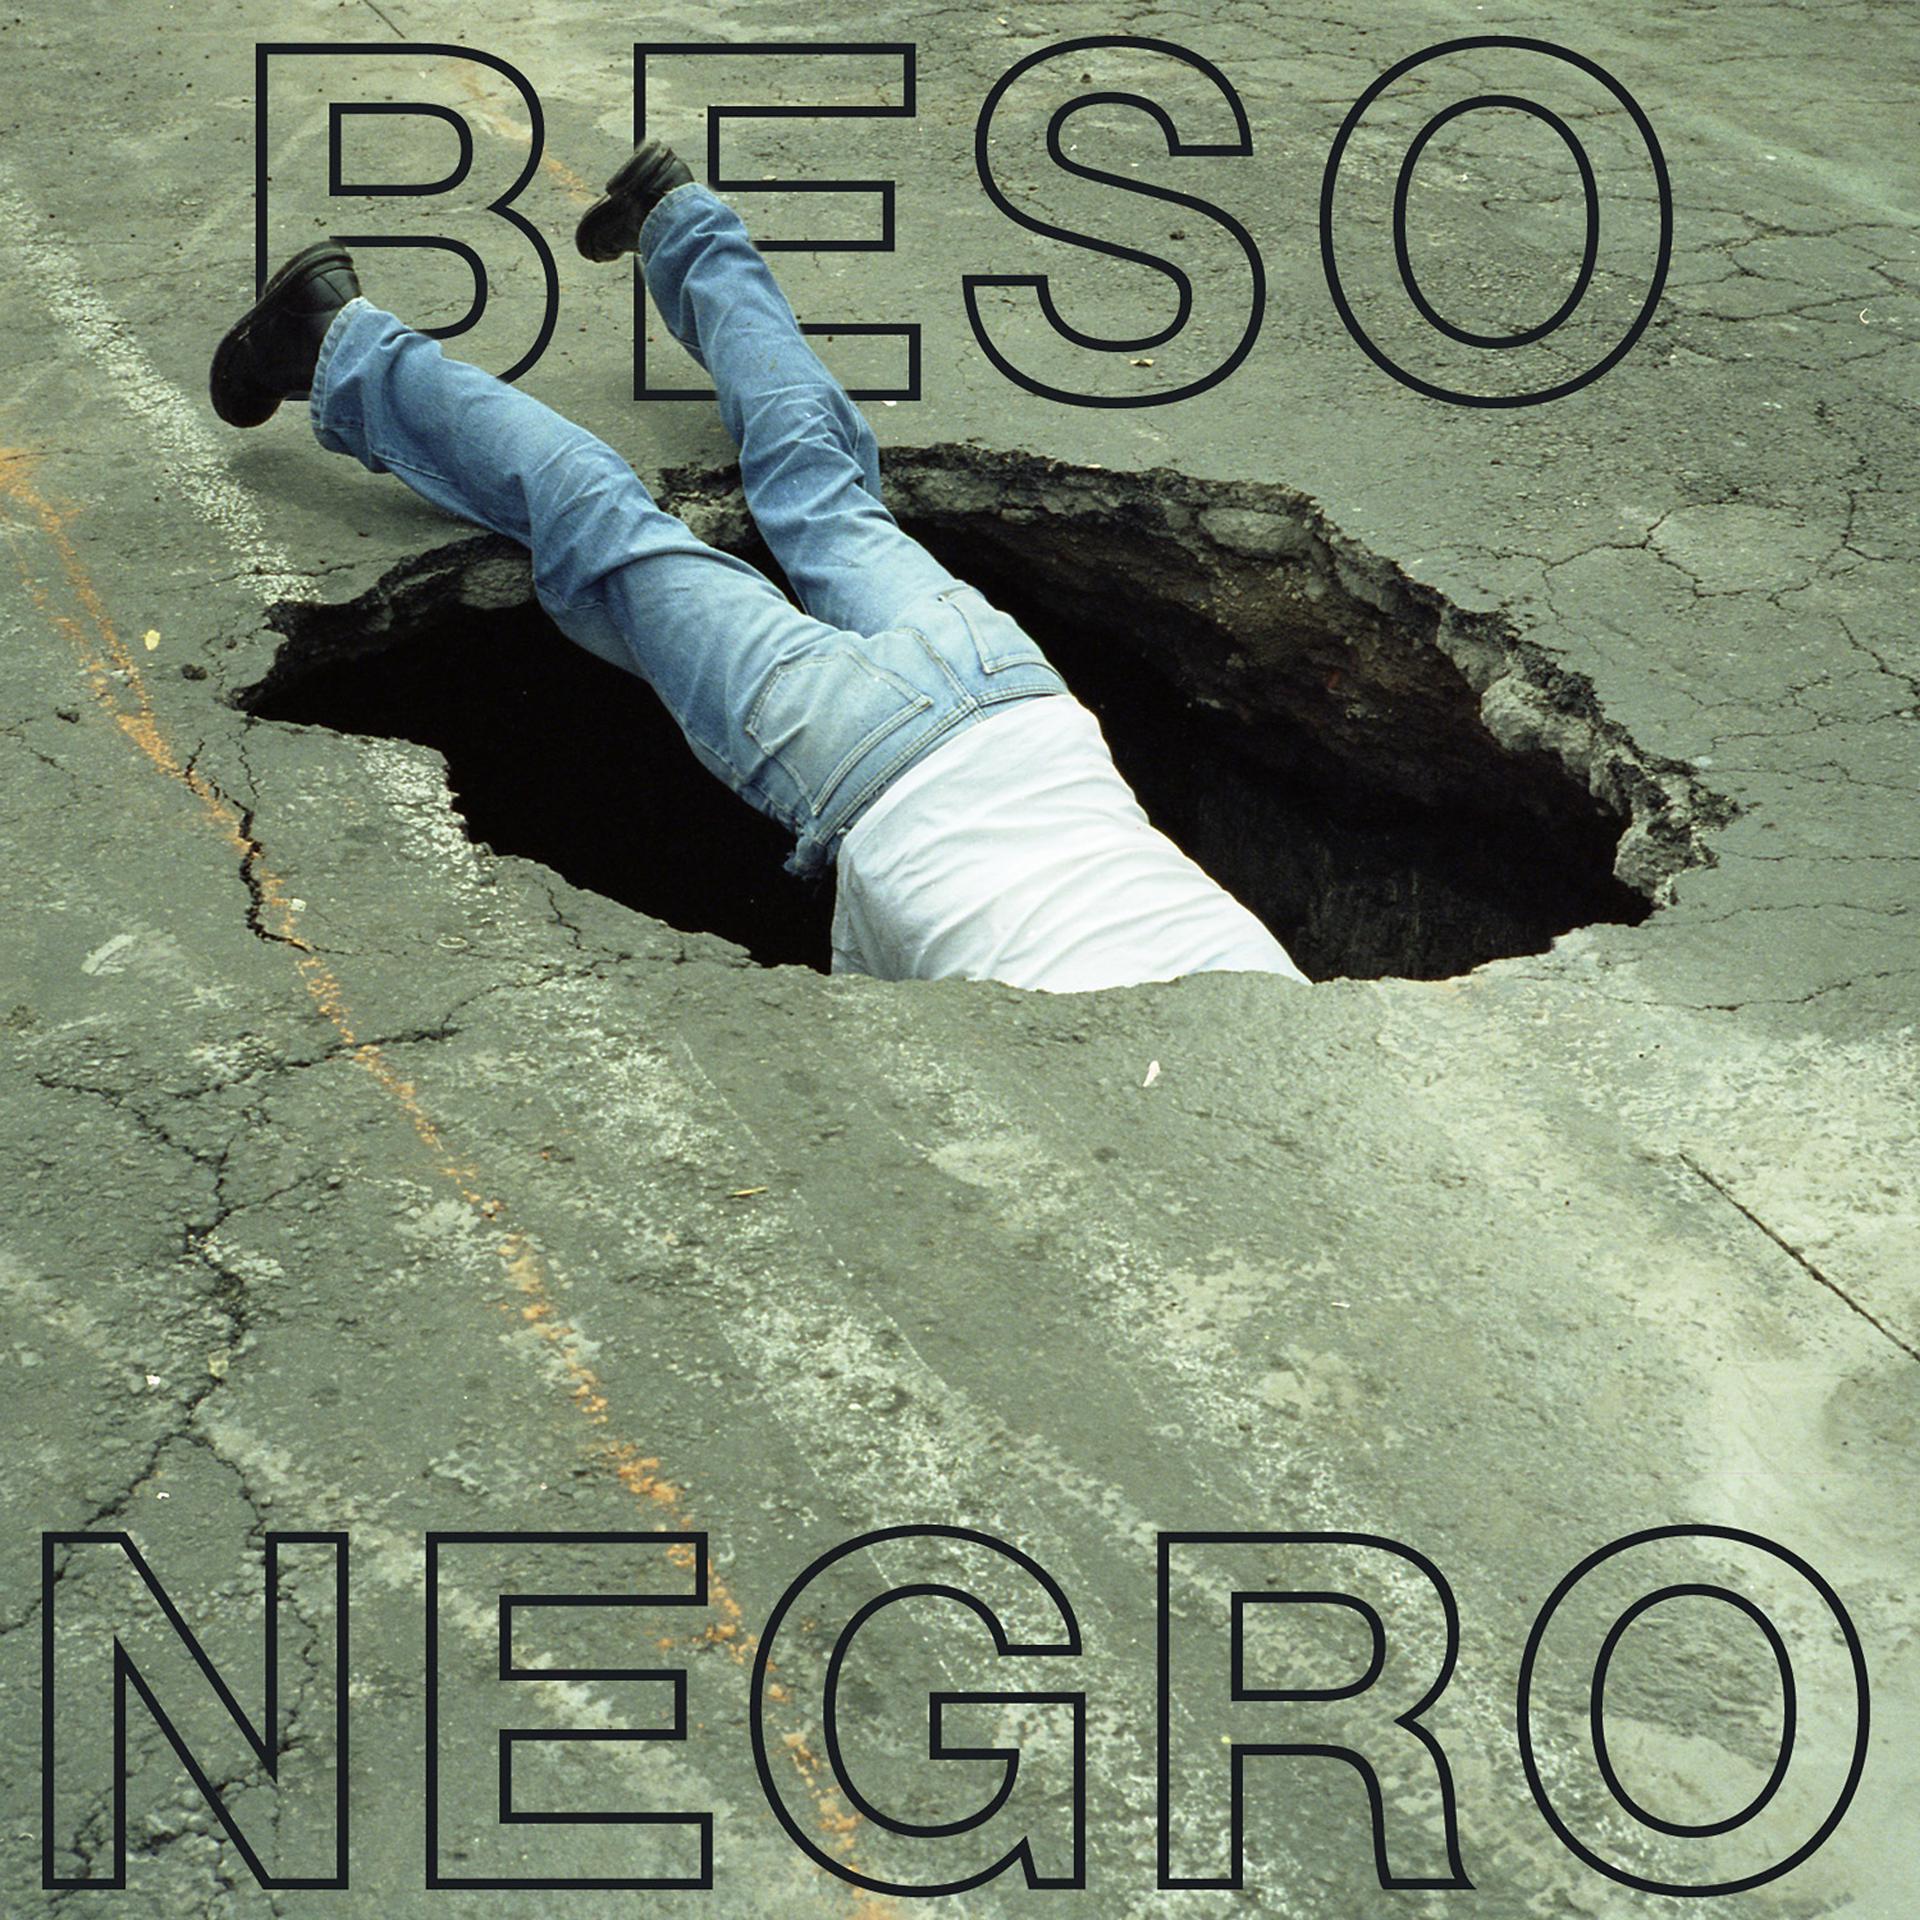 Think of one "trafico (CD)". Te negro krezorezo. Beso negro